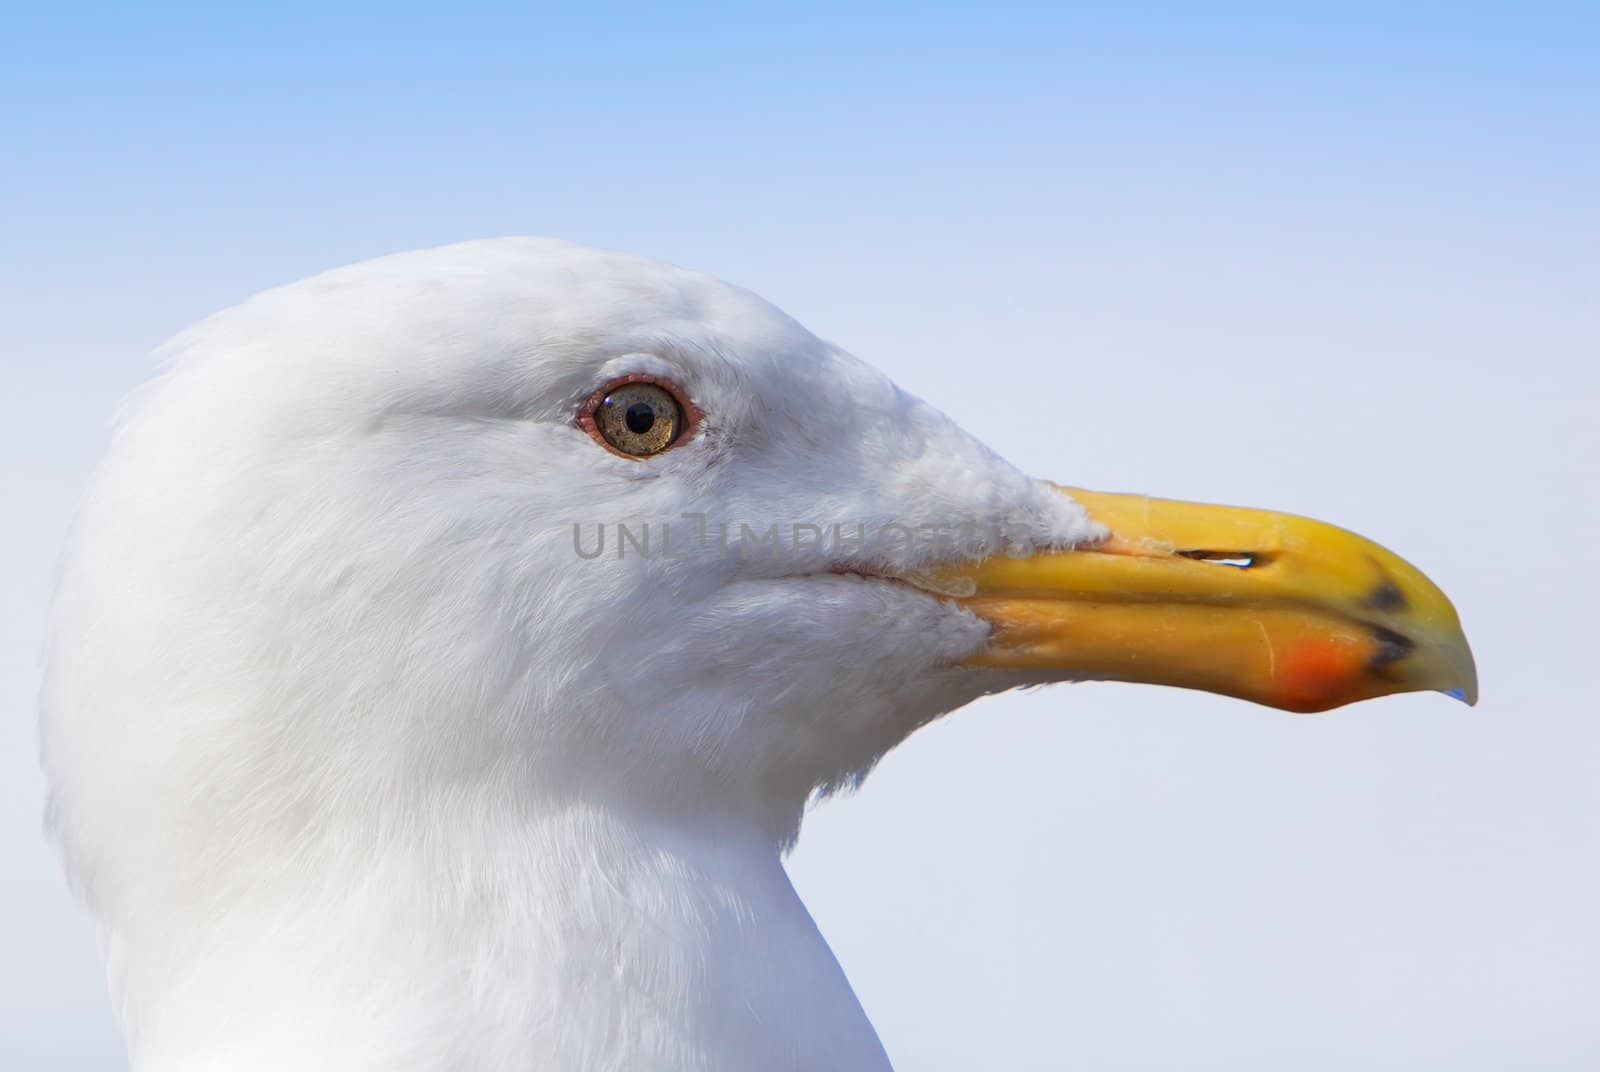 Super profile of a fine looking white seagull